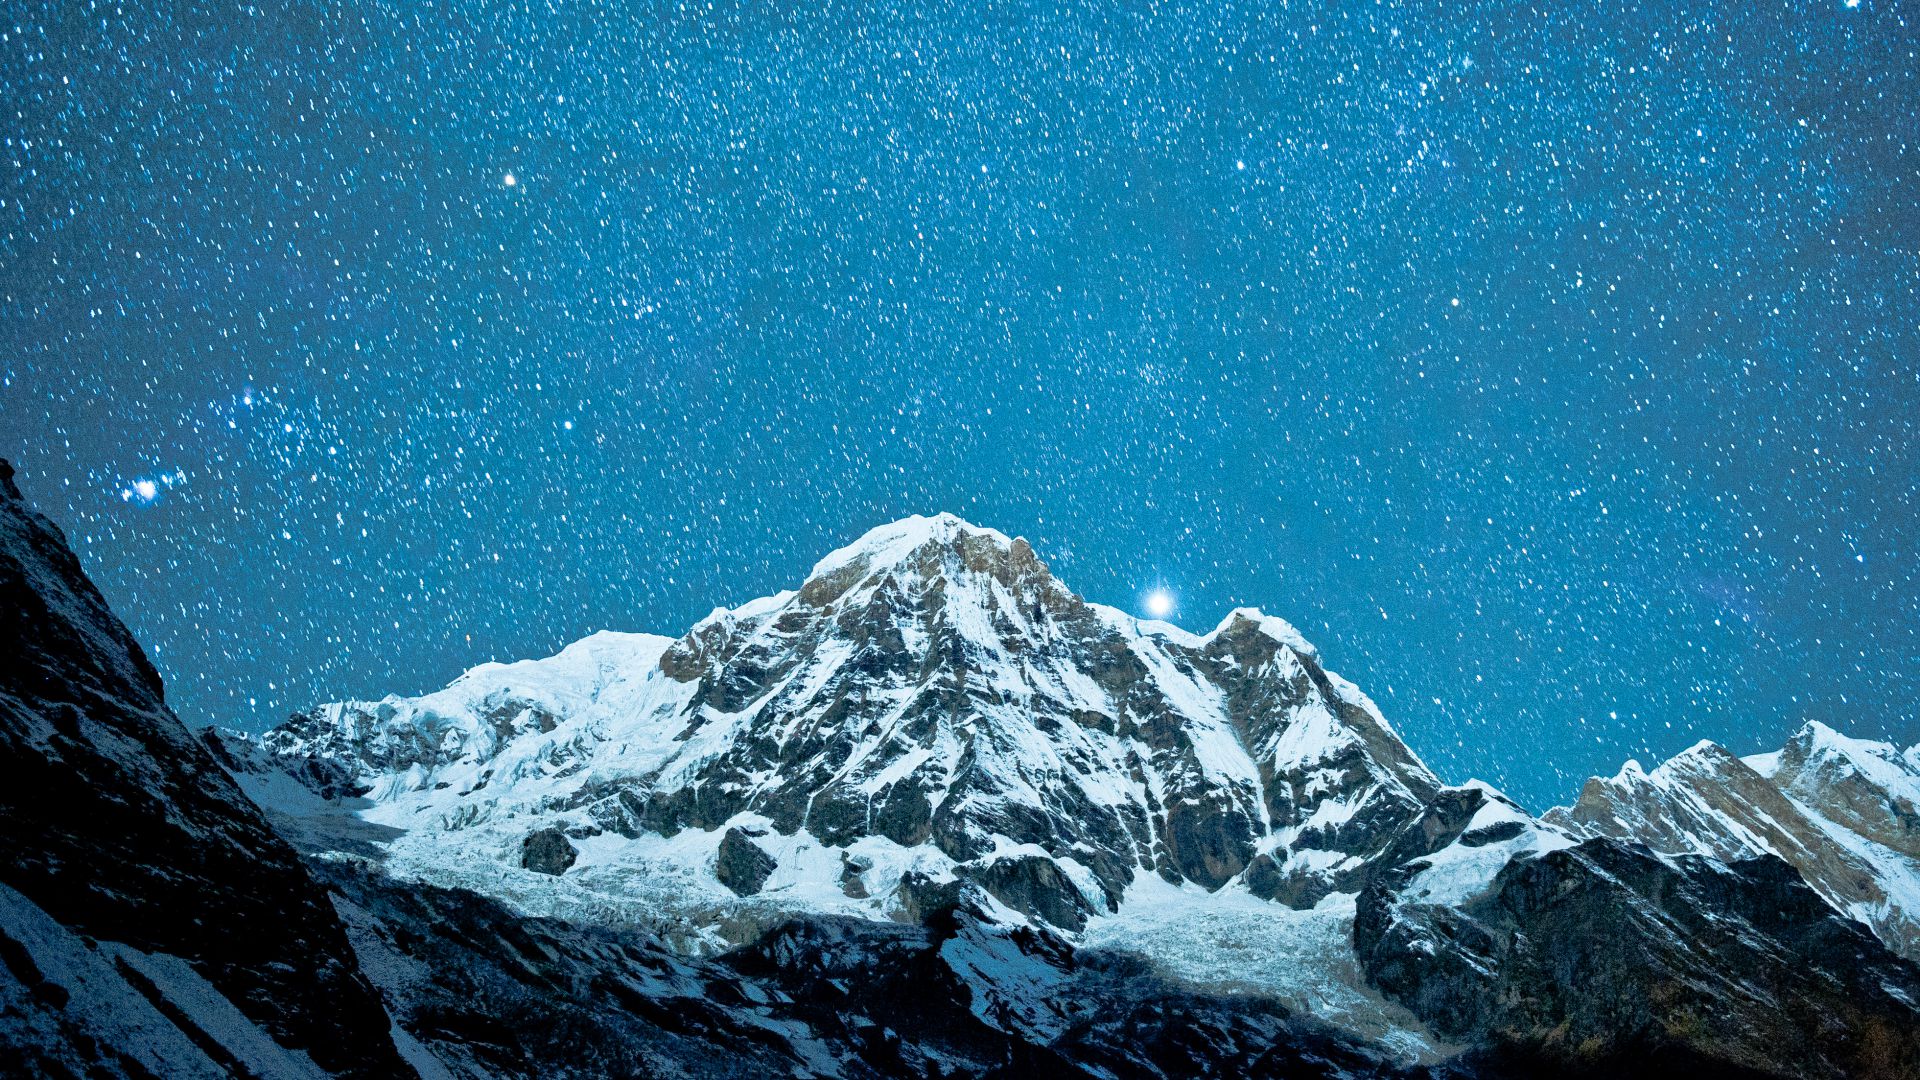 Непал, 5k, 4k, Гималаи, ночь, звезды, Nepal, 5k, 4k wallpaper, Himalayas, night, stars (horizontal)